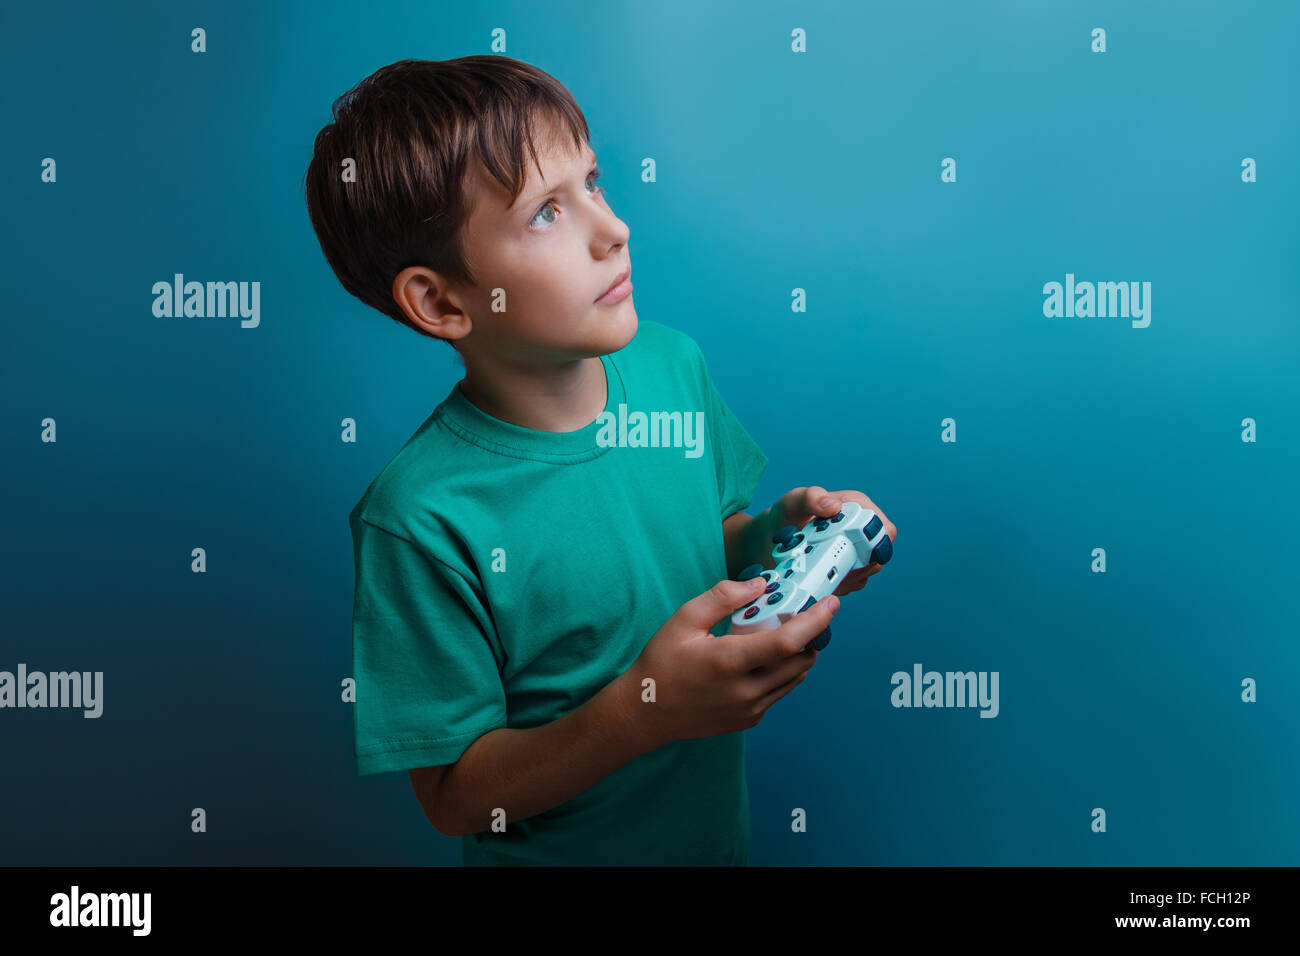 a boy of twelve European appearance holding a game joystick on a Stock Photo